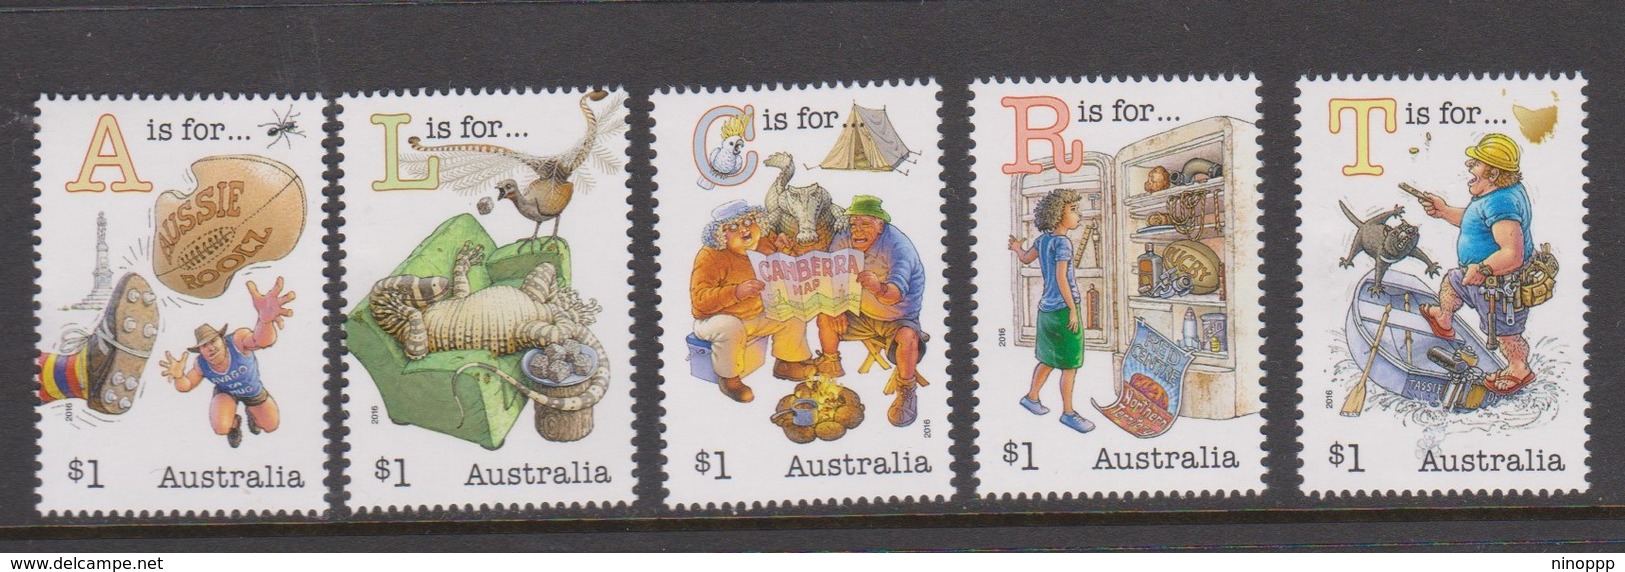 Australia ASC 3424-3428 Aussie Alphabet Part II,mint Never Hinged - Mint Stamps